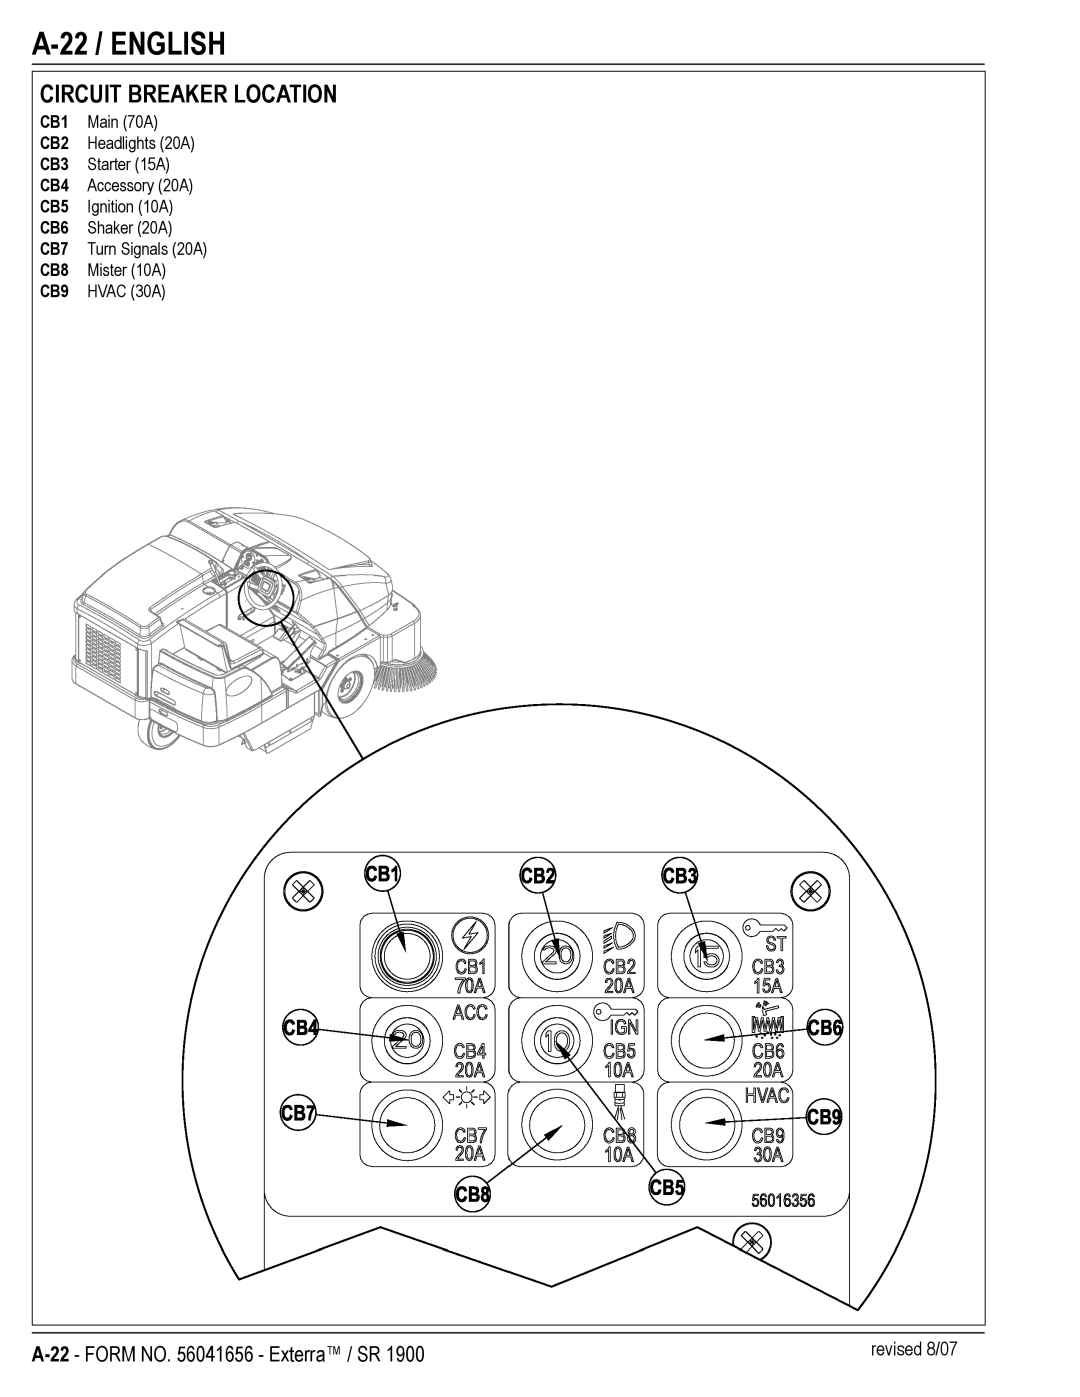 Nilfisk-ALTO SR 1900 manual 22 / English, Circuit Breaker Location 